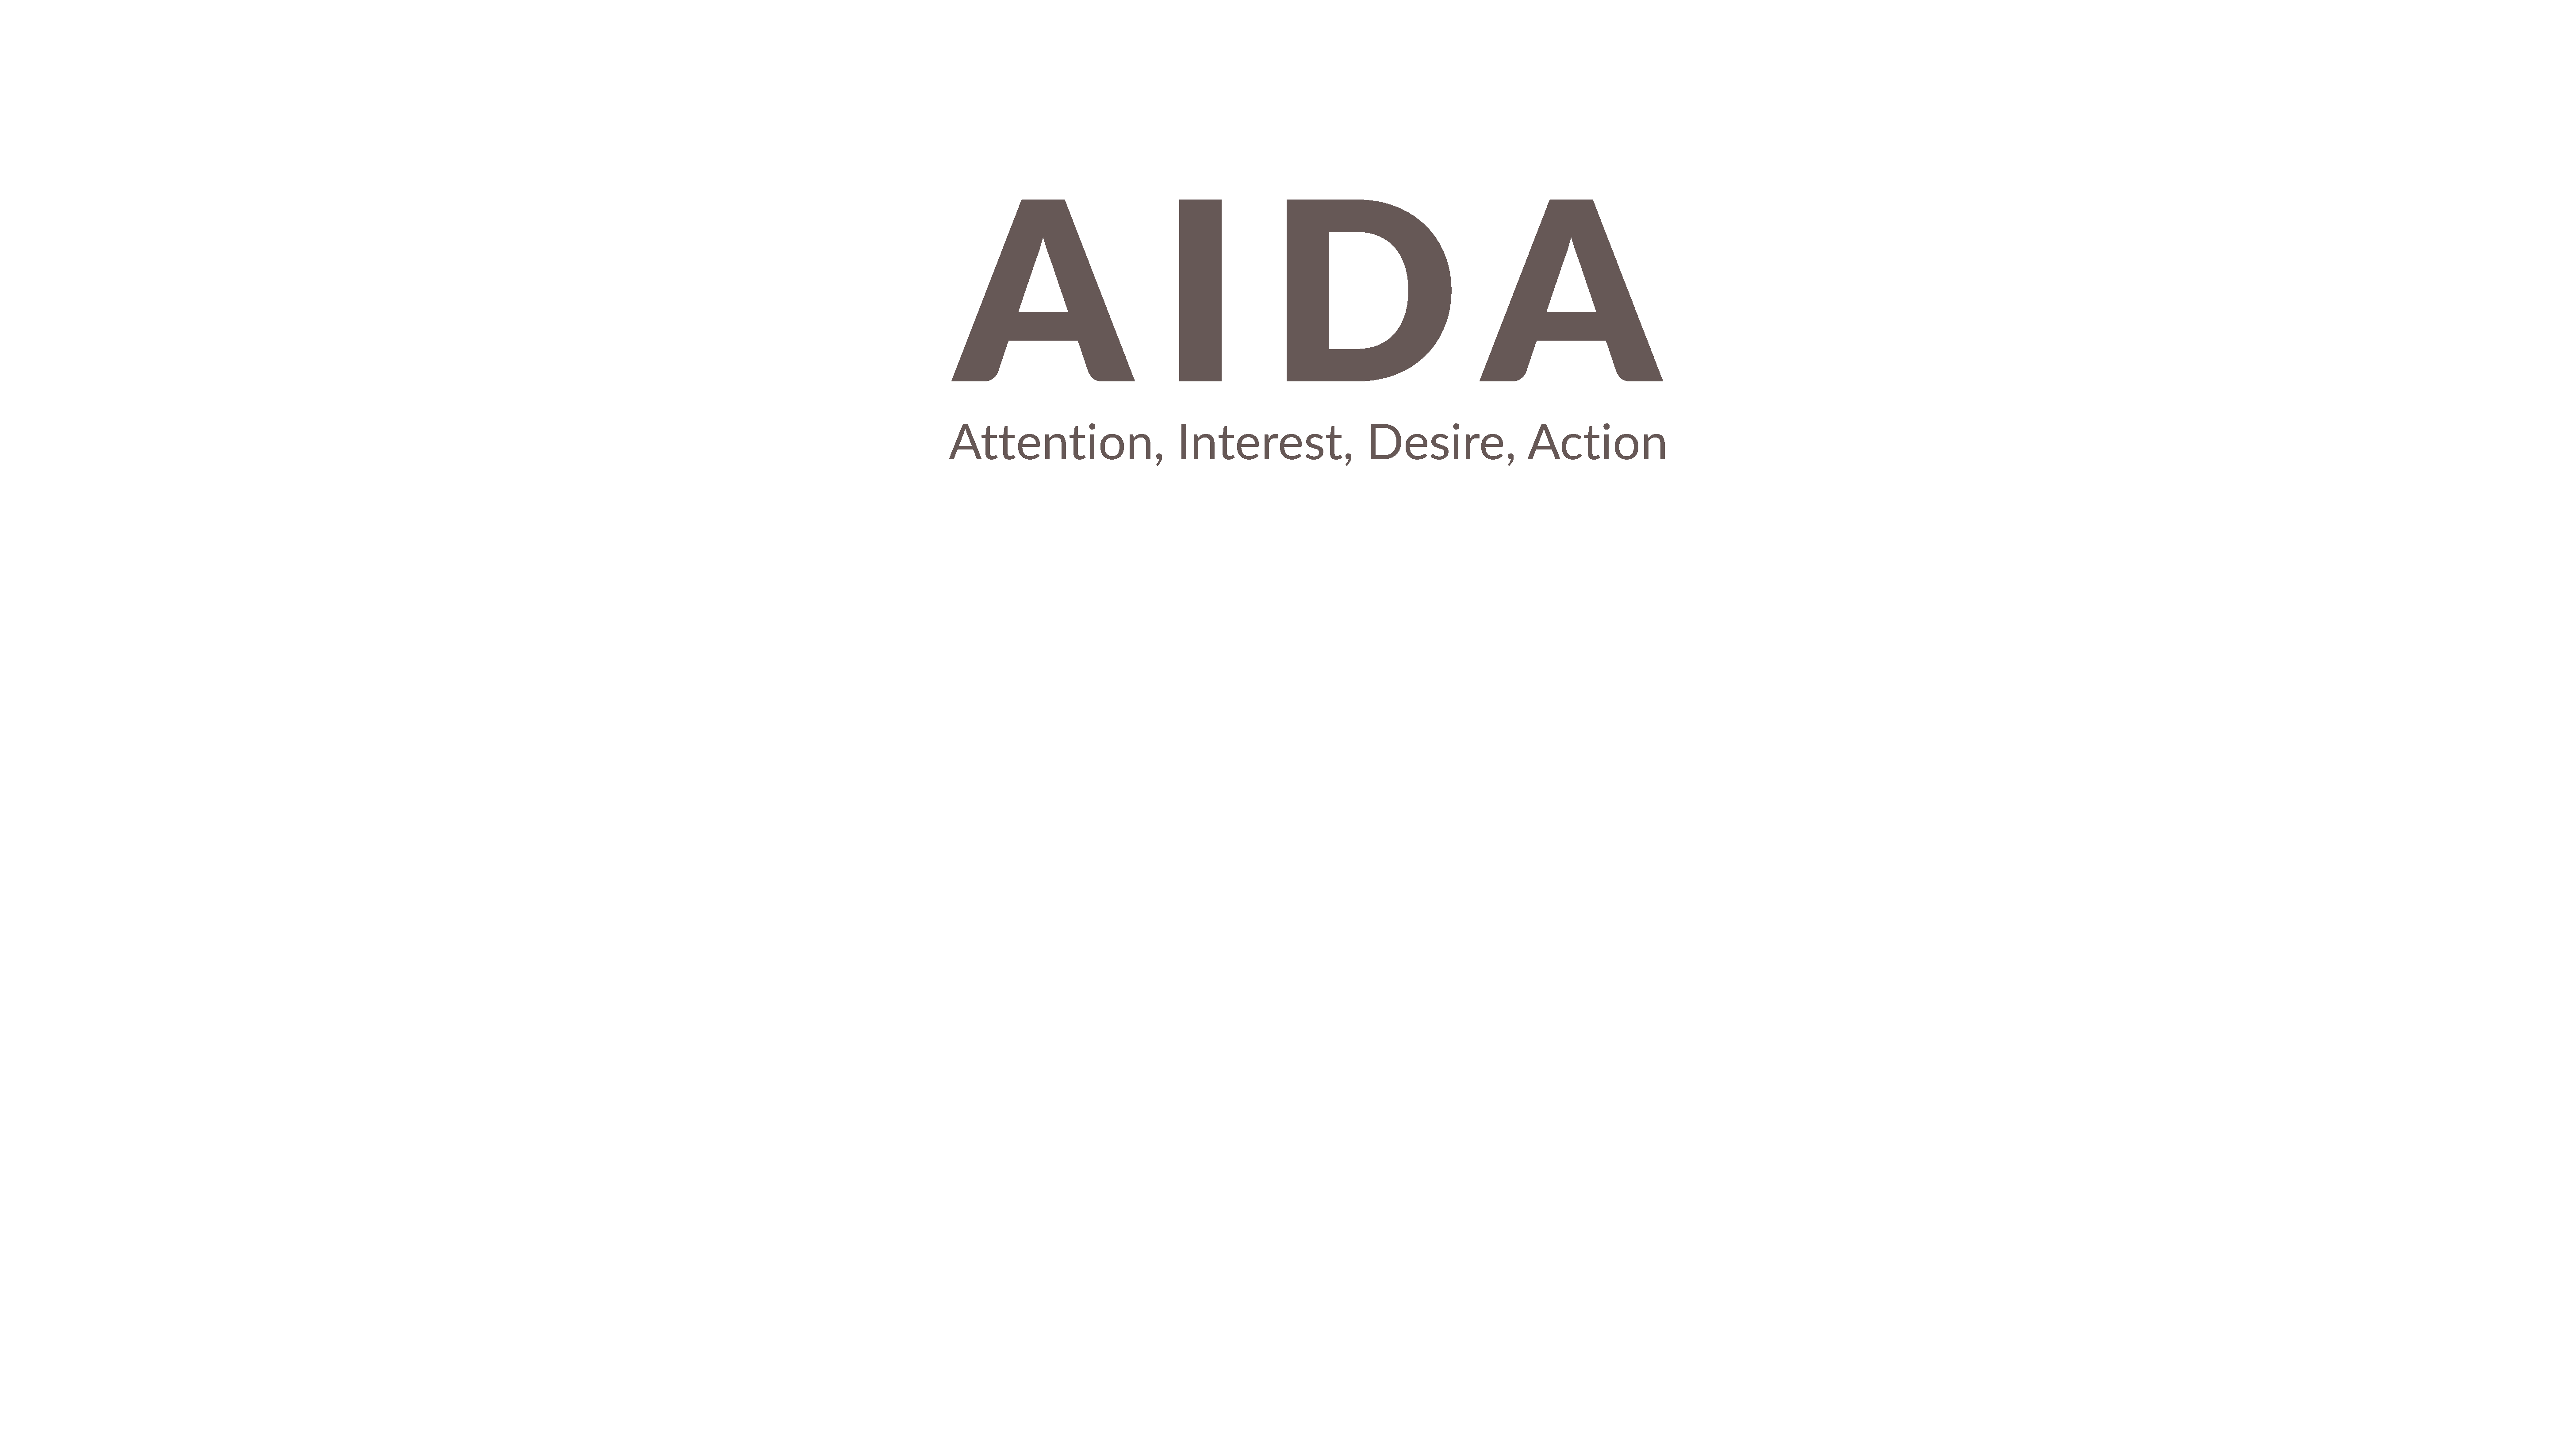 AIDA - attention, interest, desire, action